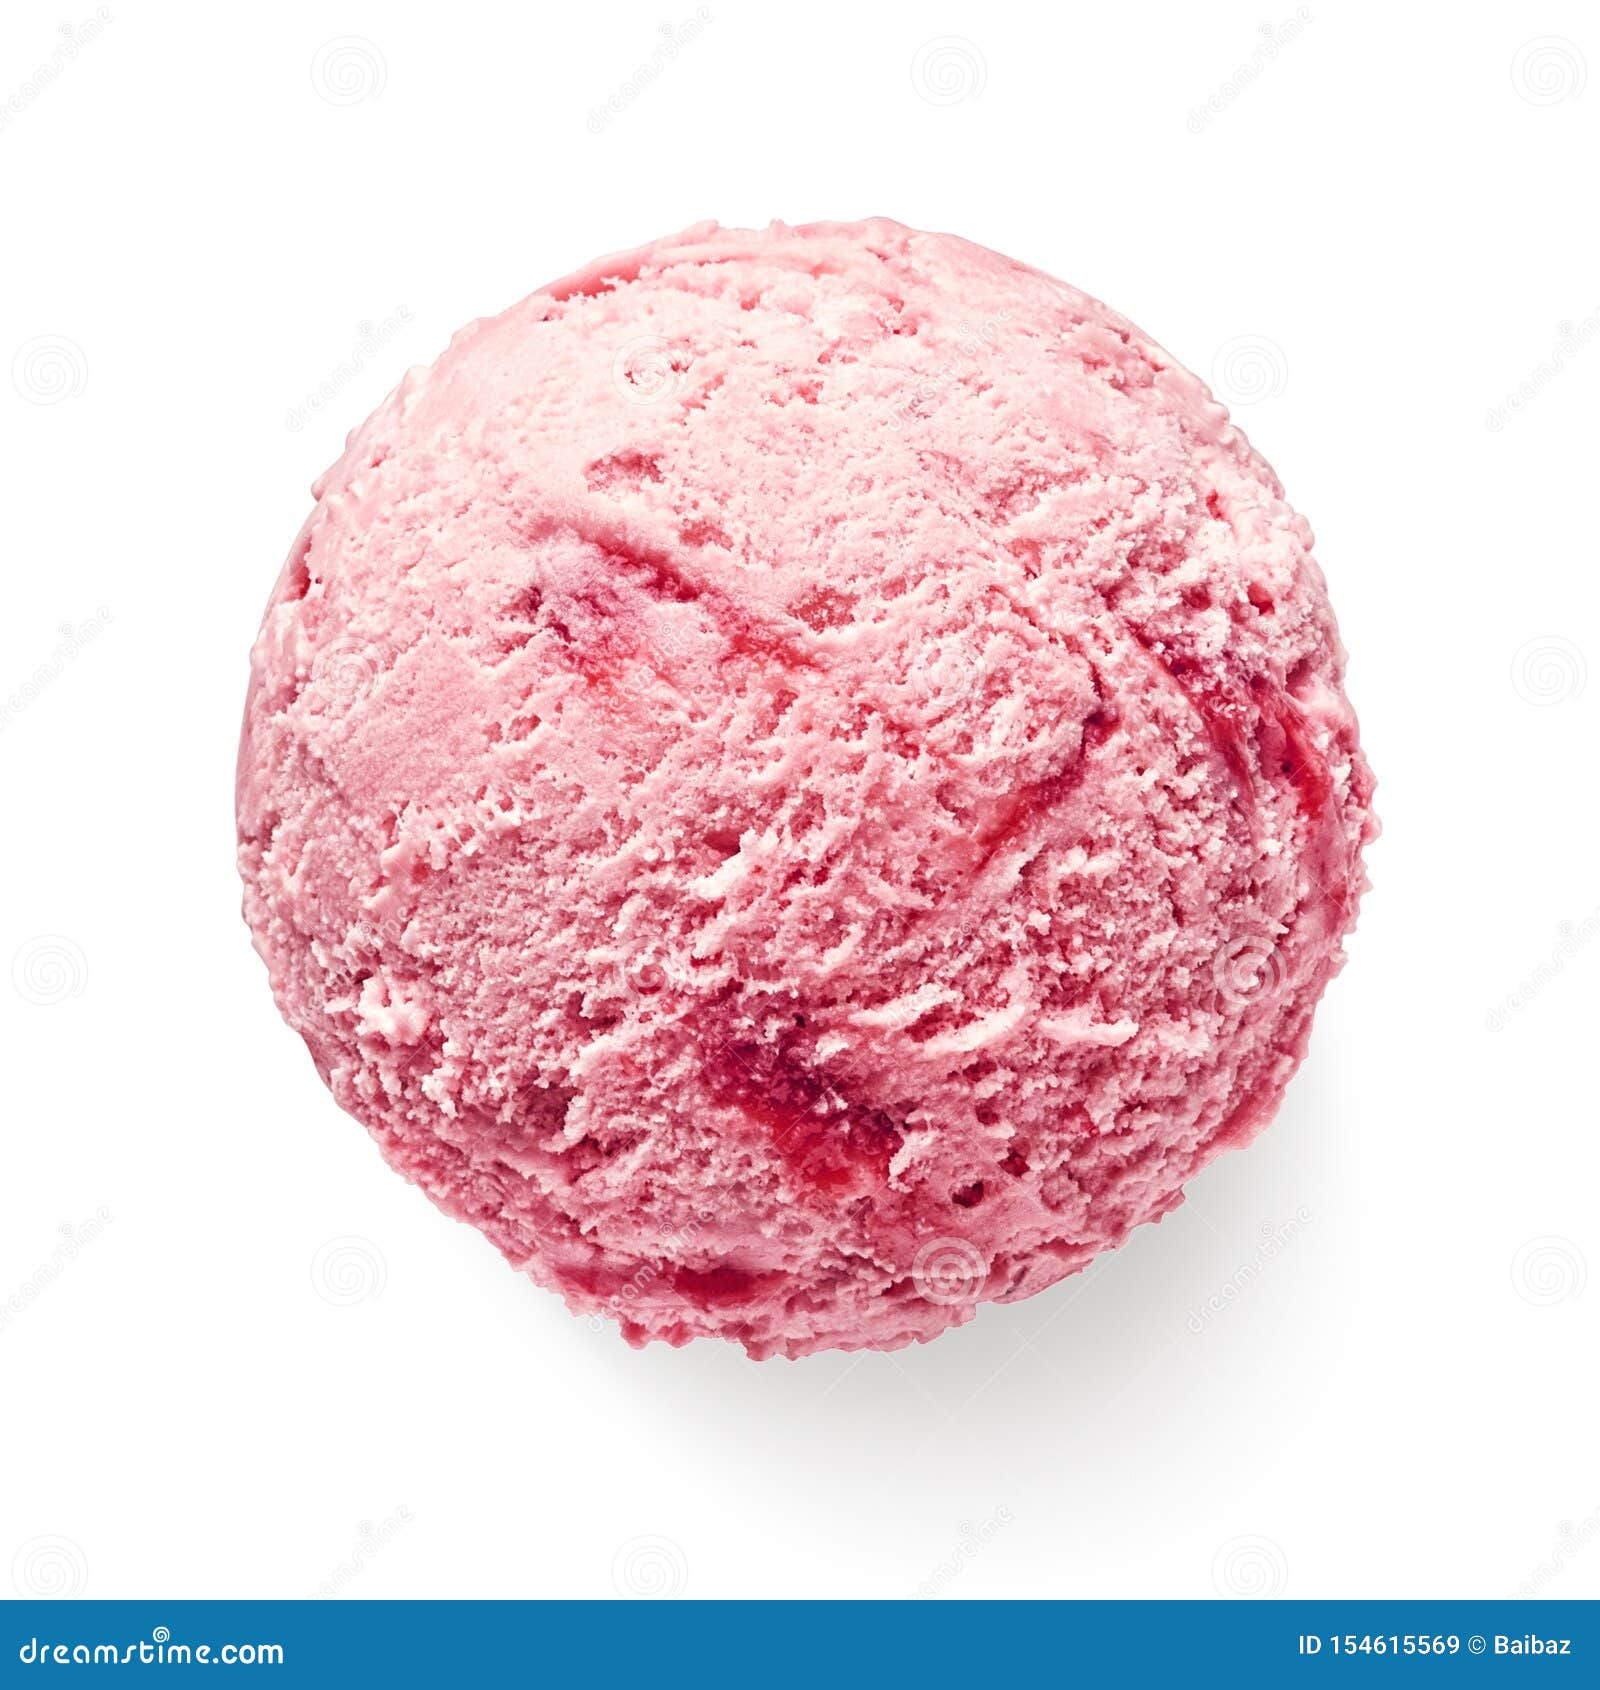 single strawberry ice cream ball or scoop